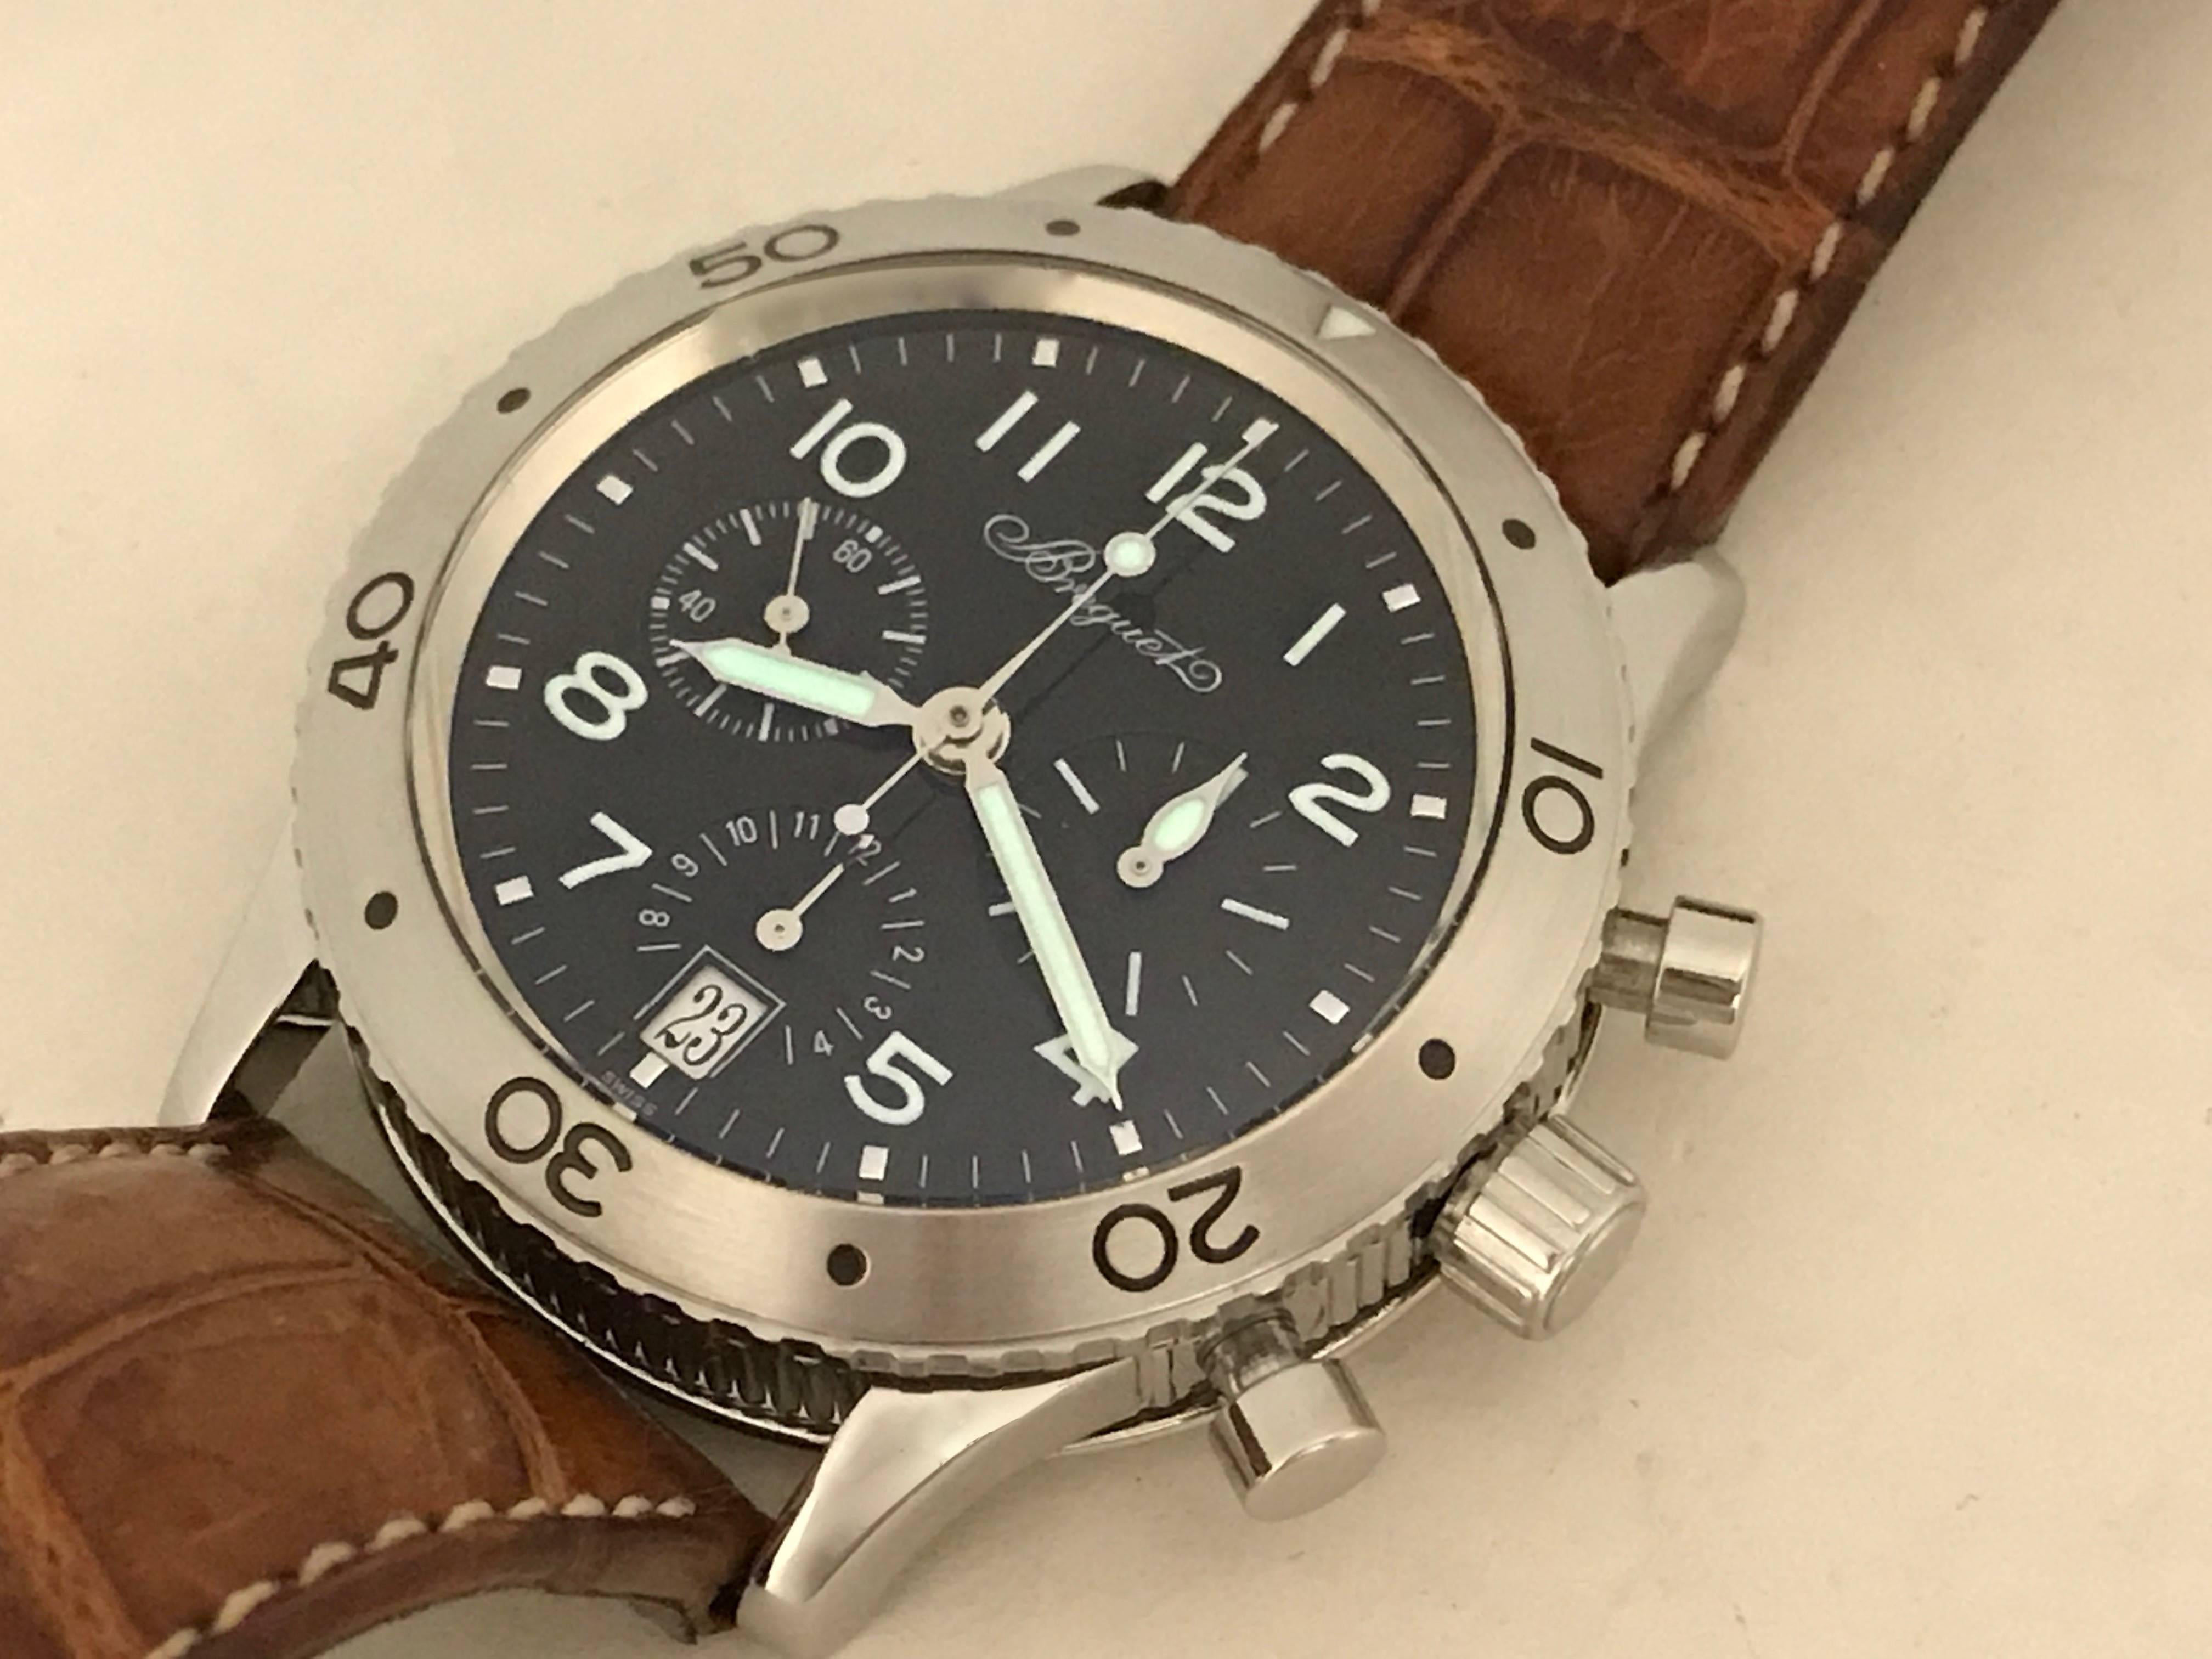 Contemporary Breguet Stainless Steel Transatlantic Chronograph Automatic Wristwatch 